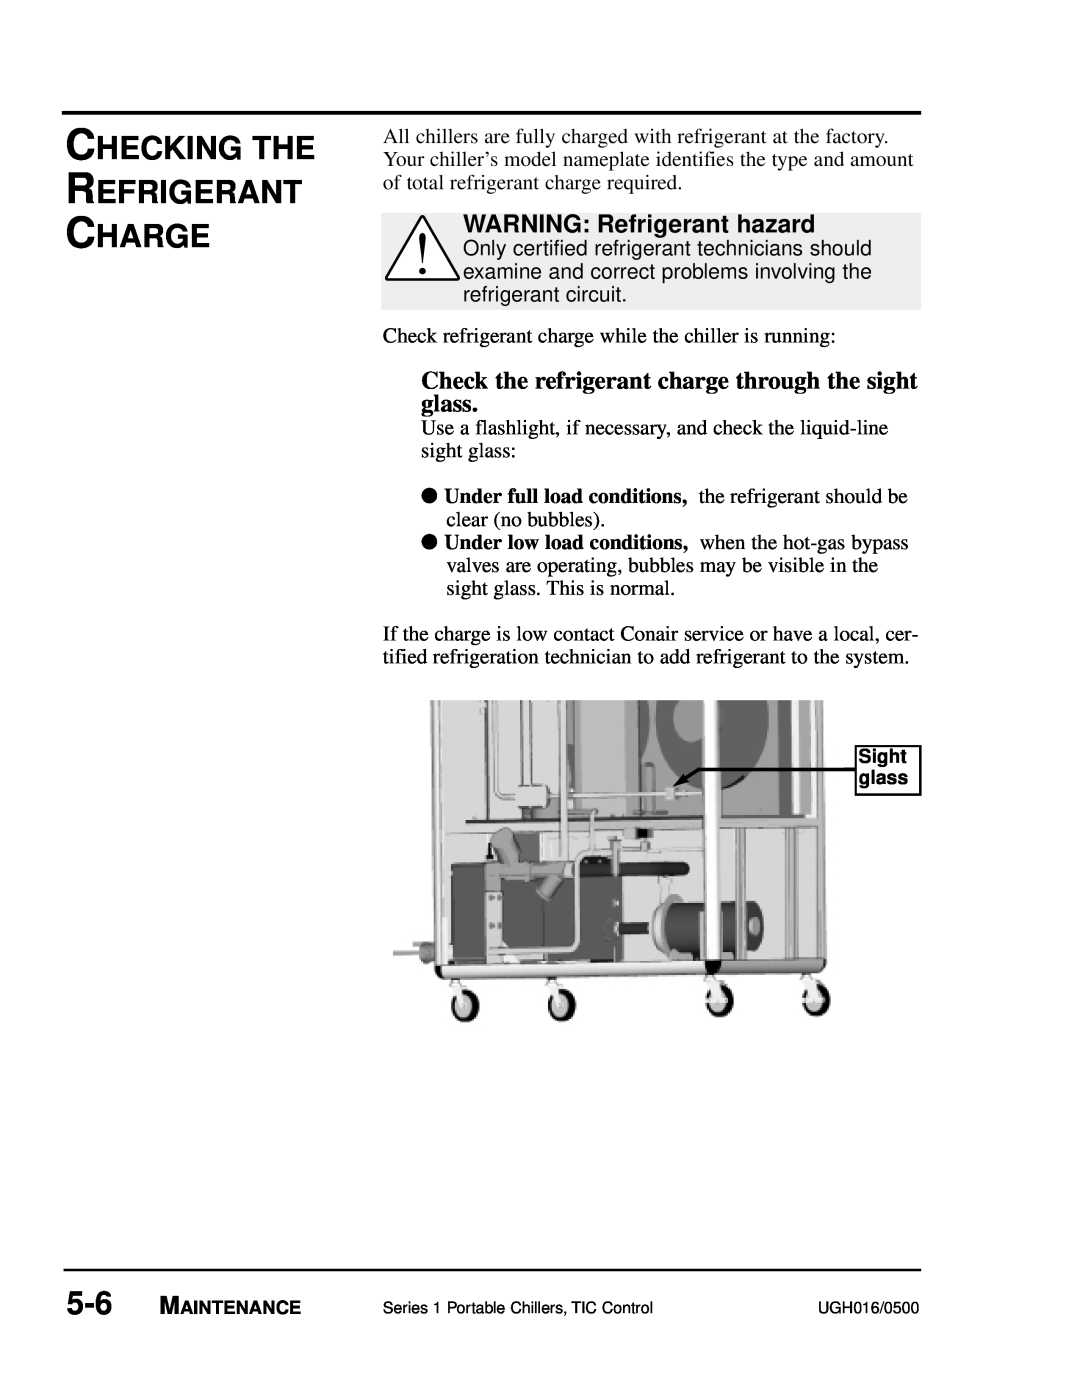 Conair UGH016/0500 manual Checking The Refrigerant Charge, WARNING Refrigerant hazard 